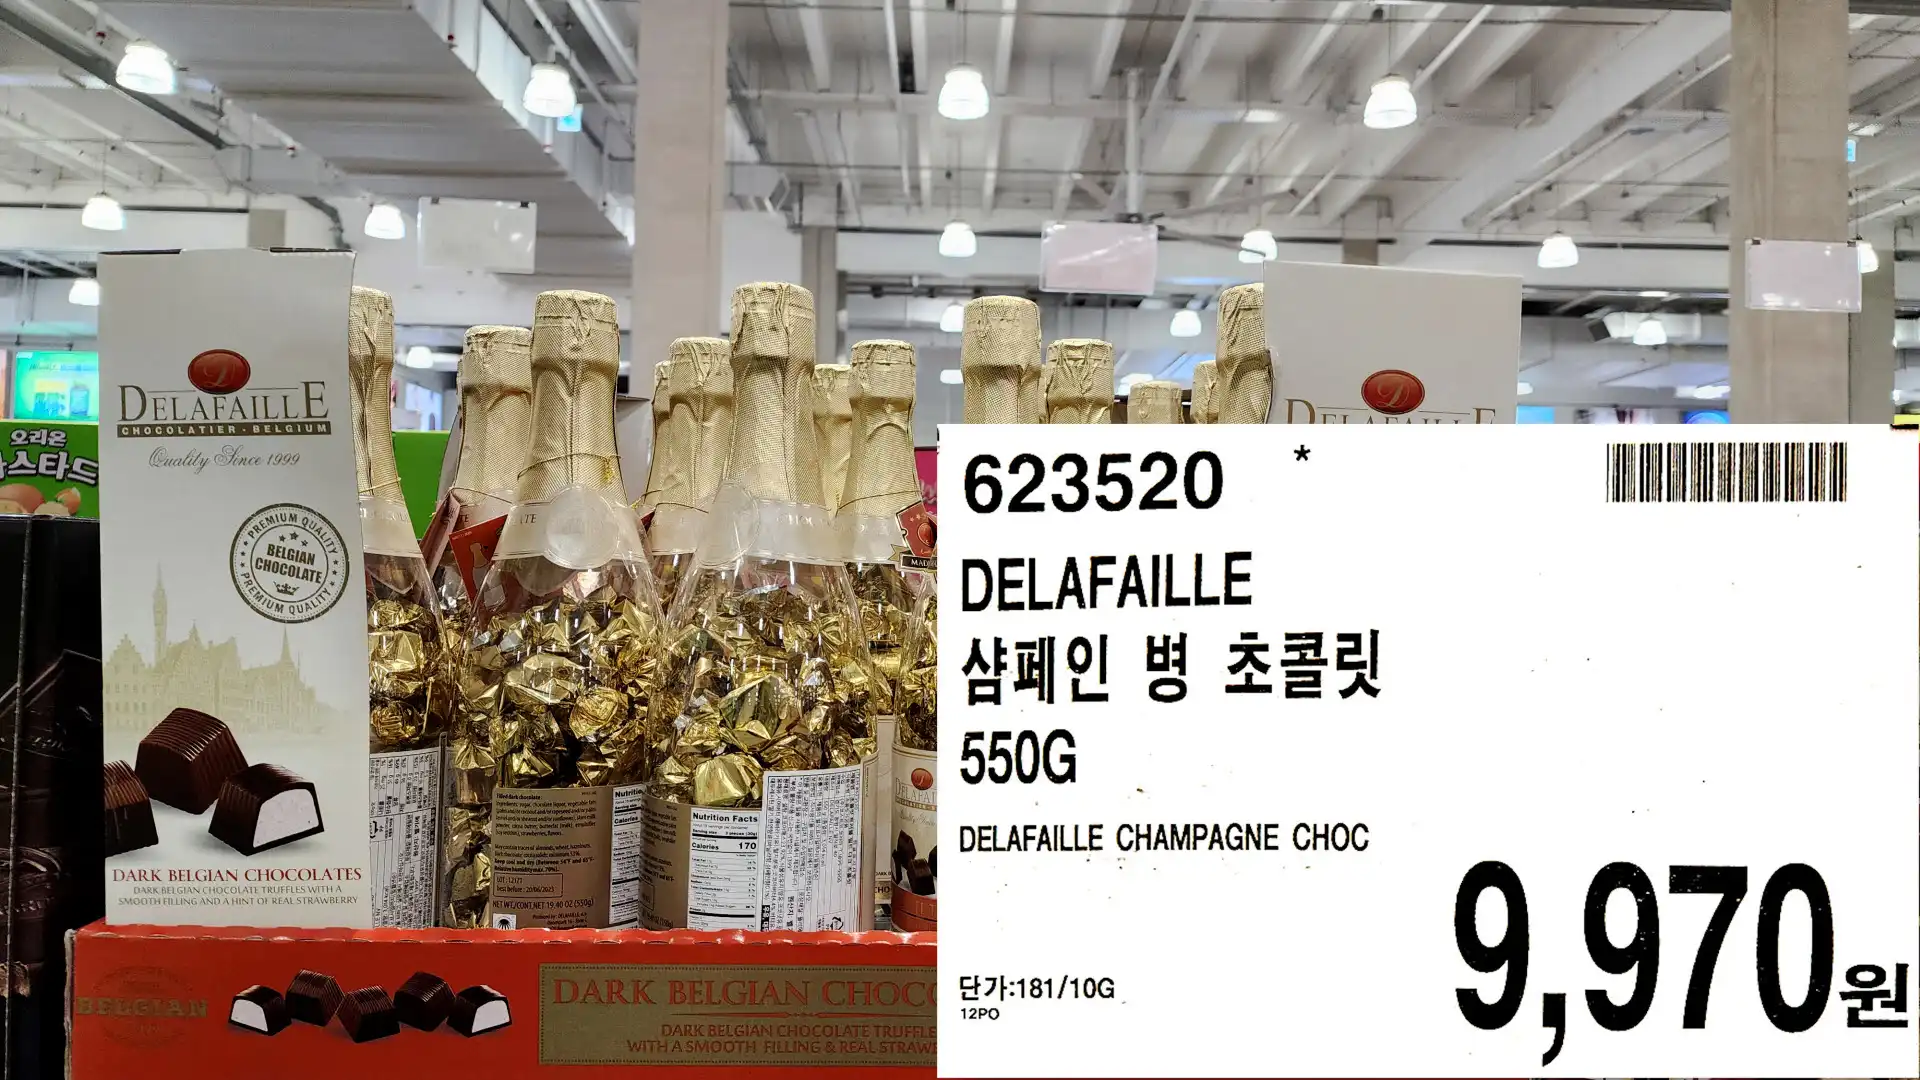 DELAFAILLE
샴페인 병 초콜릿
550G
DELAFAILLE CHAMPAGNE CHOC
9&#44;970원